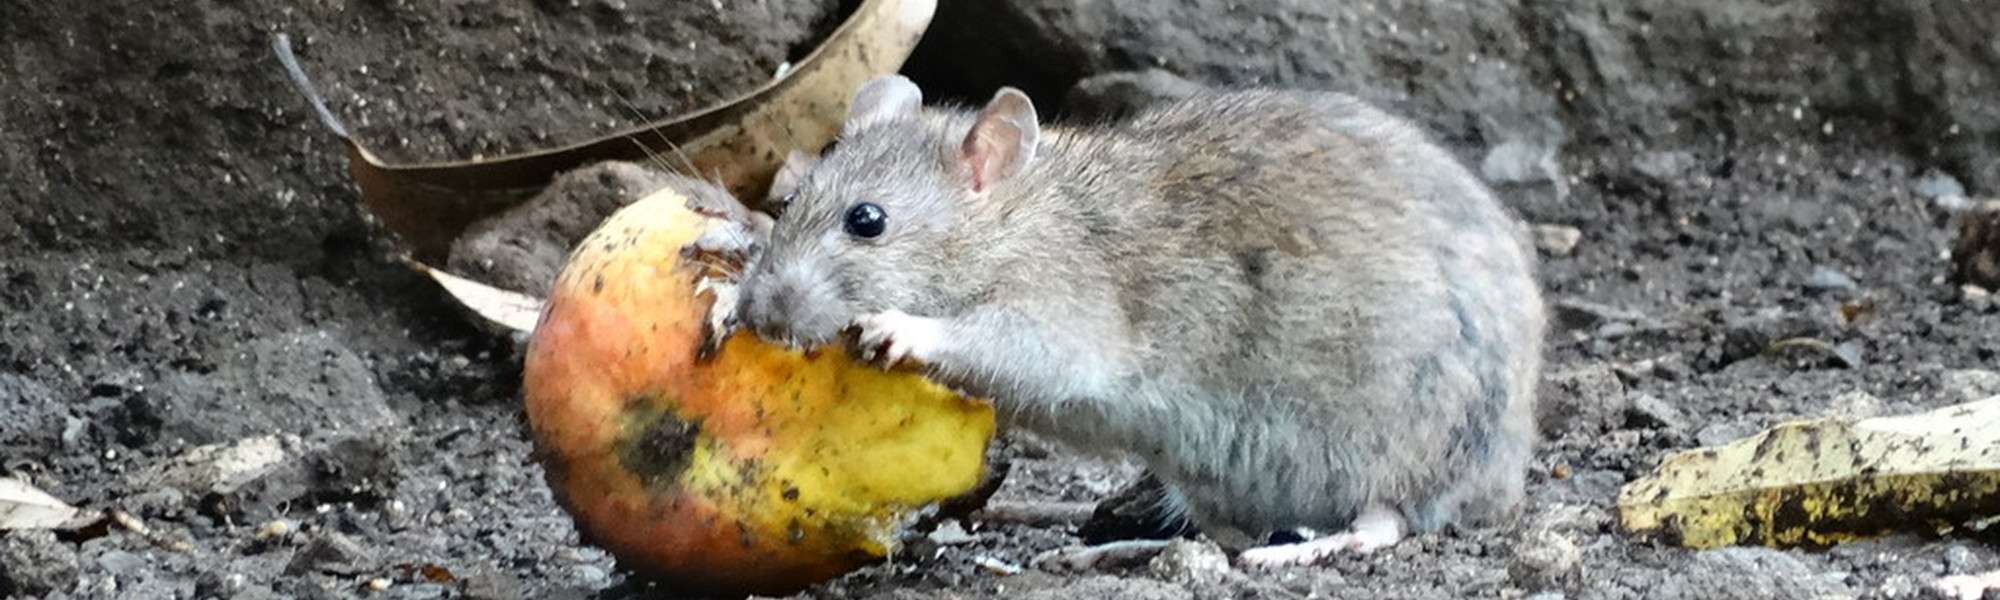 Rotta syö mangoa